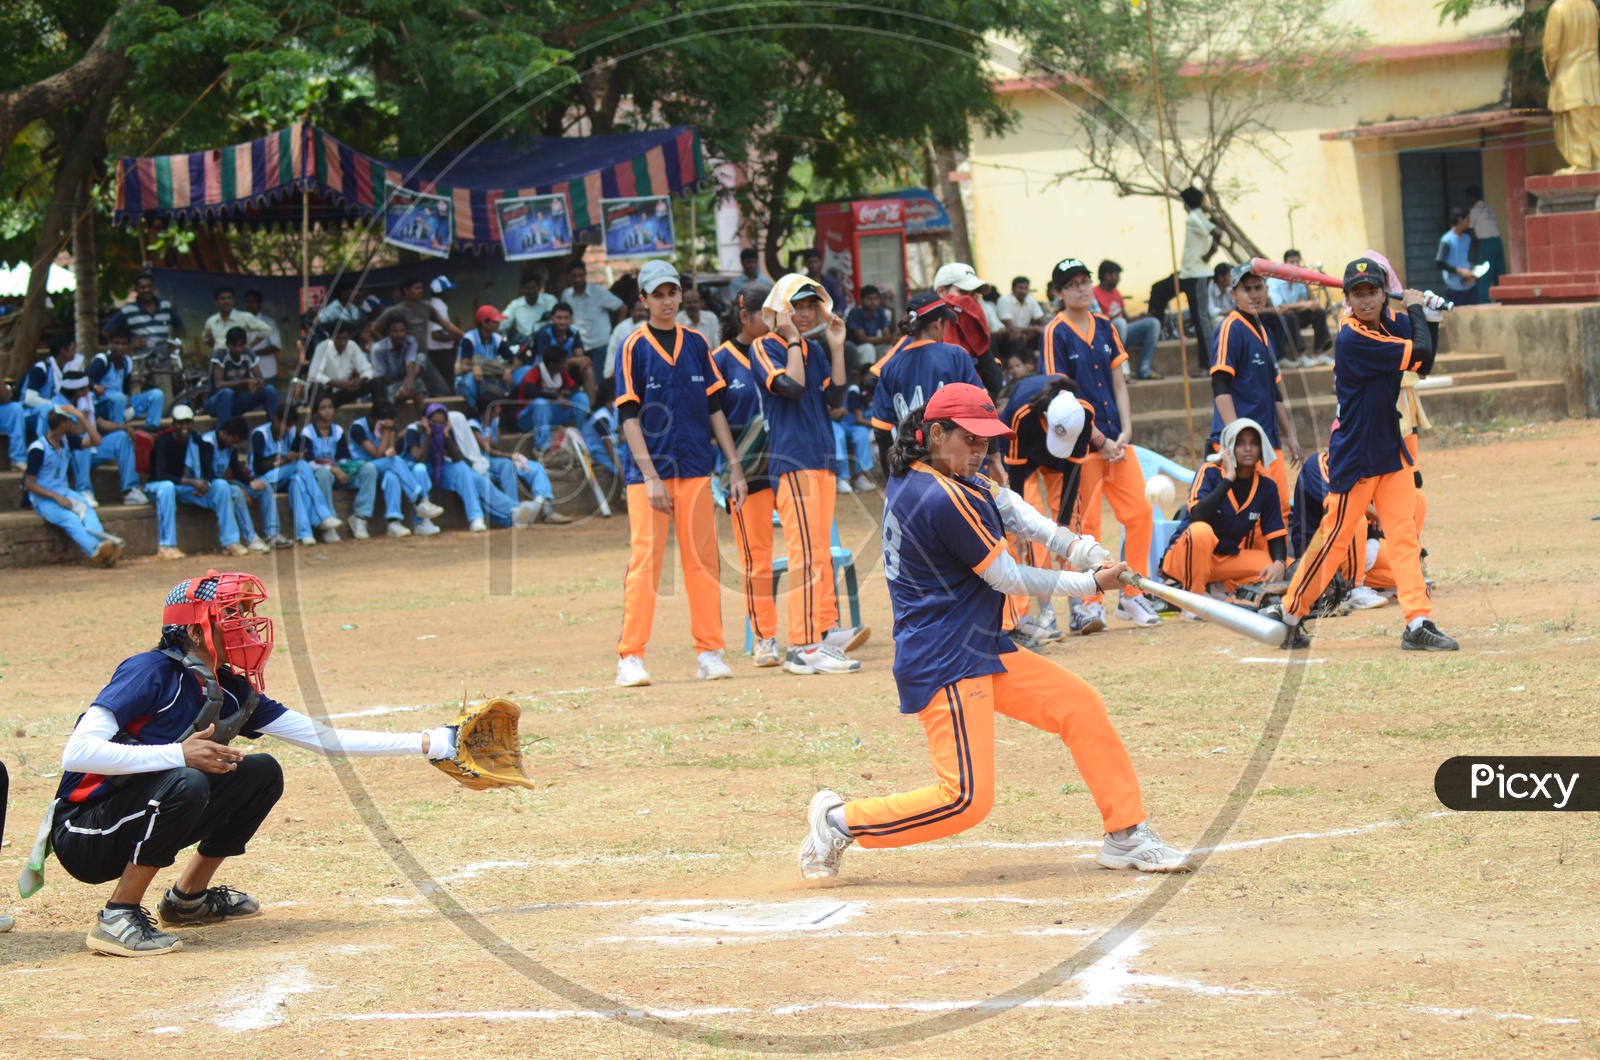 Indian College girls during a Baseball match